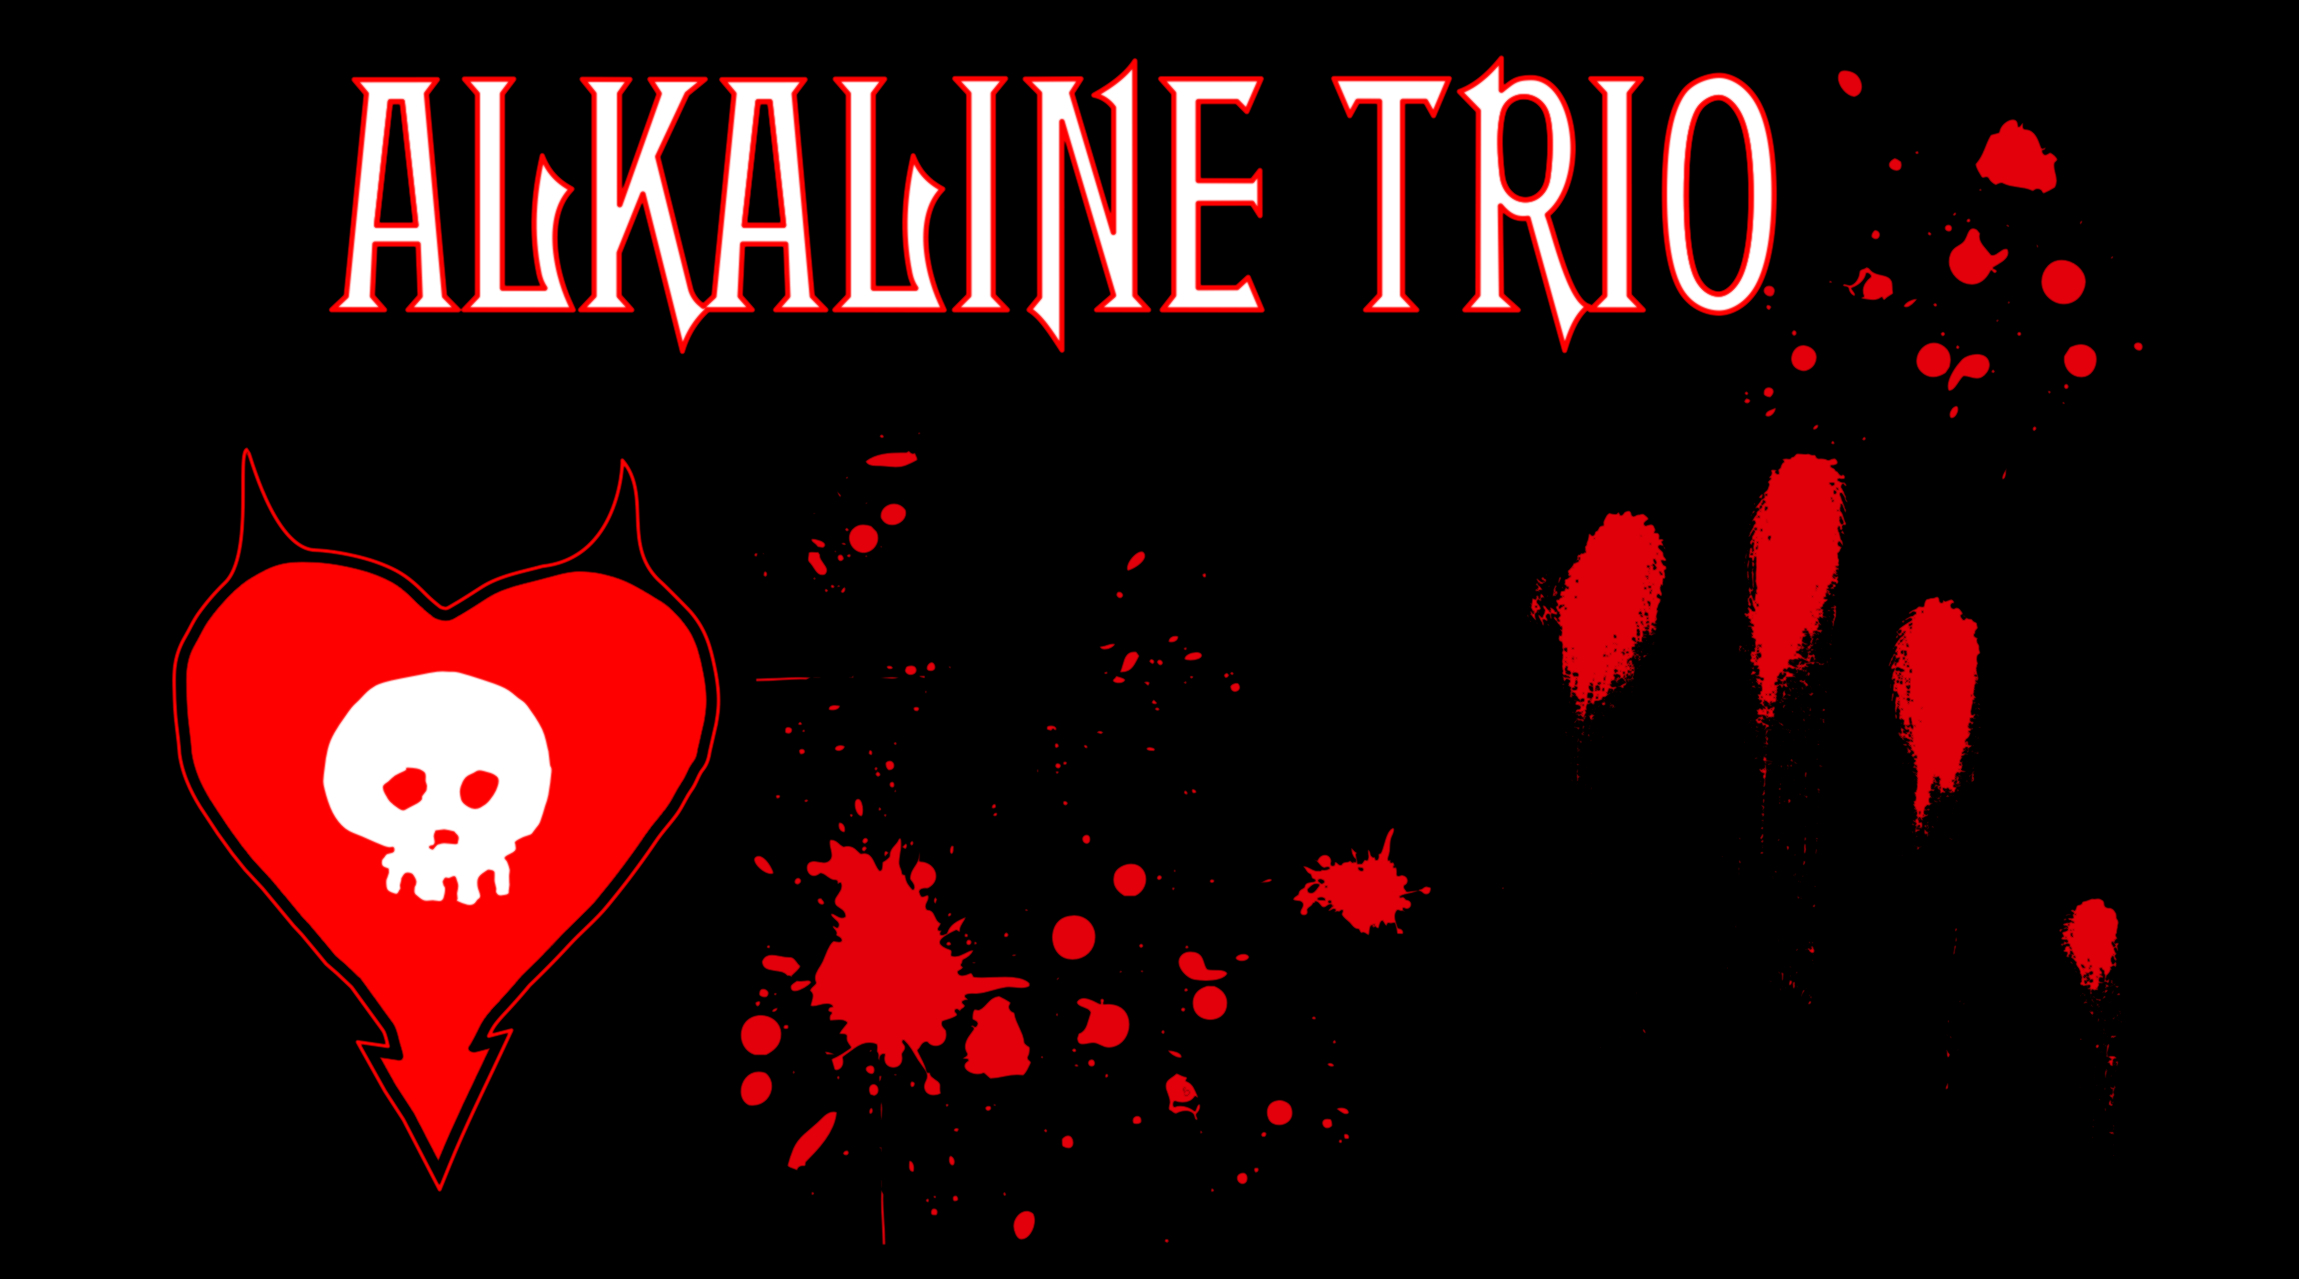 Alkaline Trio Image Wallpaper HD